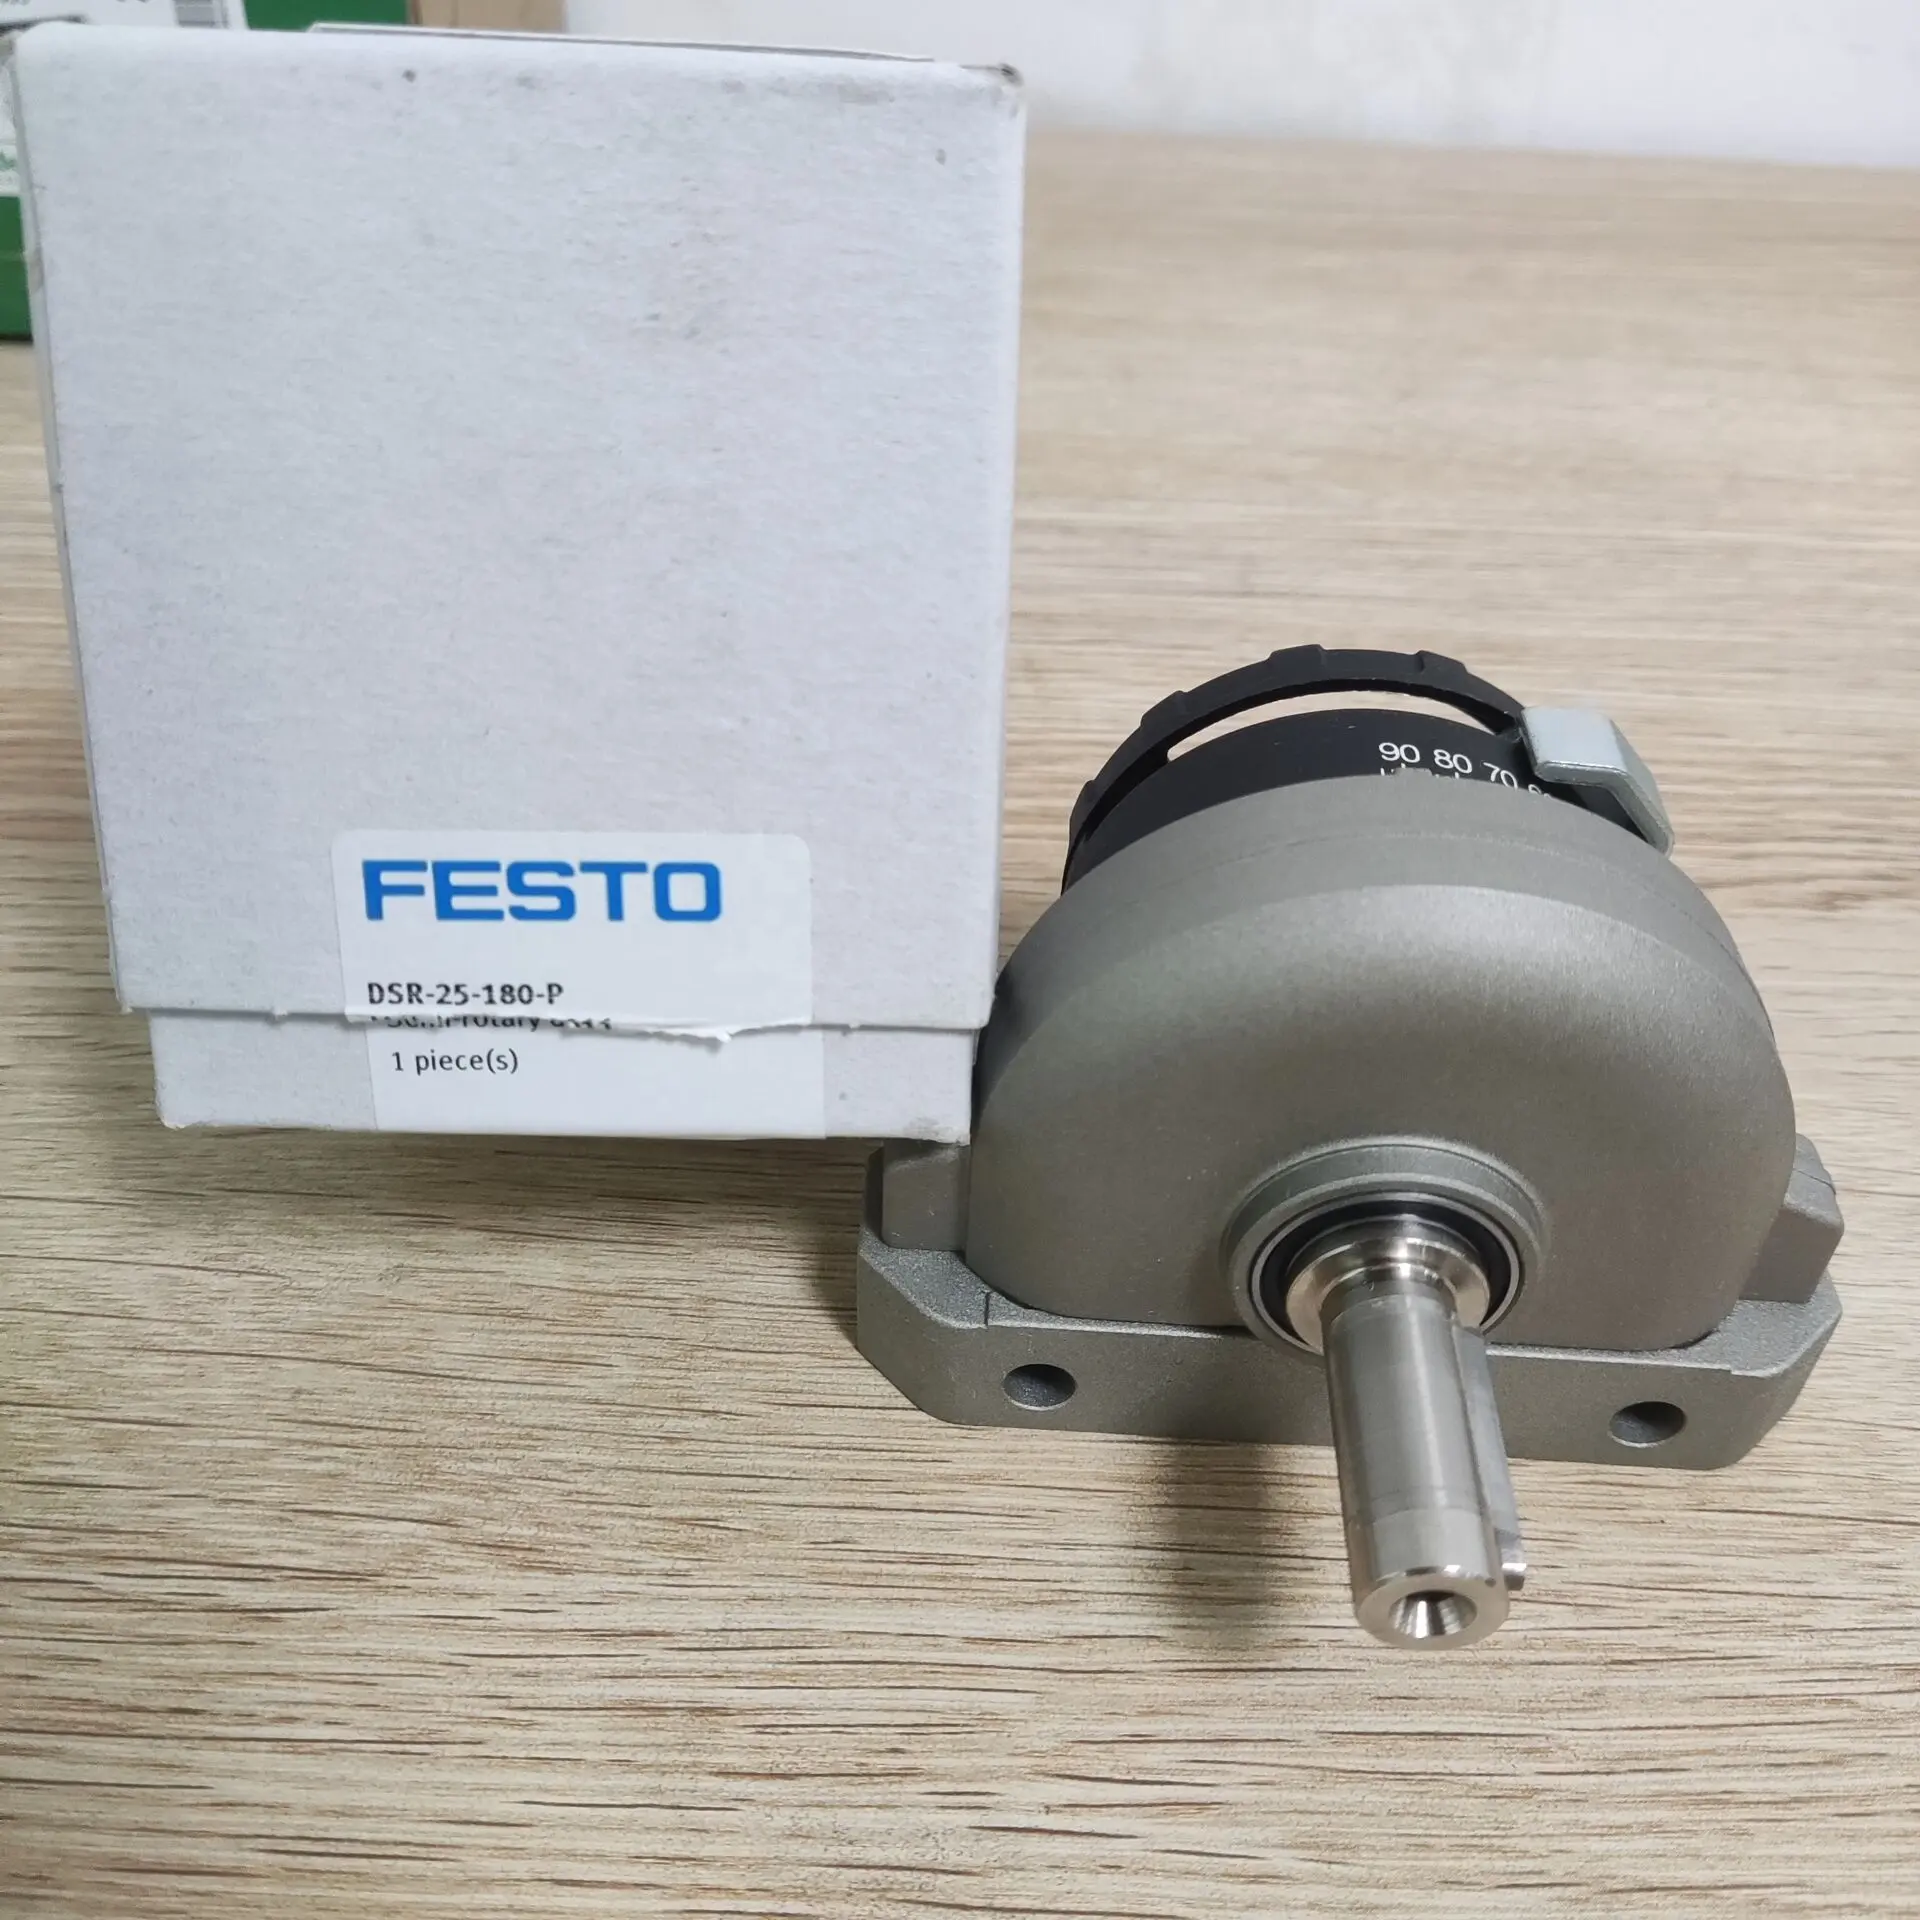 Attuatore a quarto di giro Festos DSR-25-180-P 11911 azionamento rotativo pneumatico